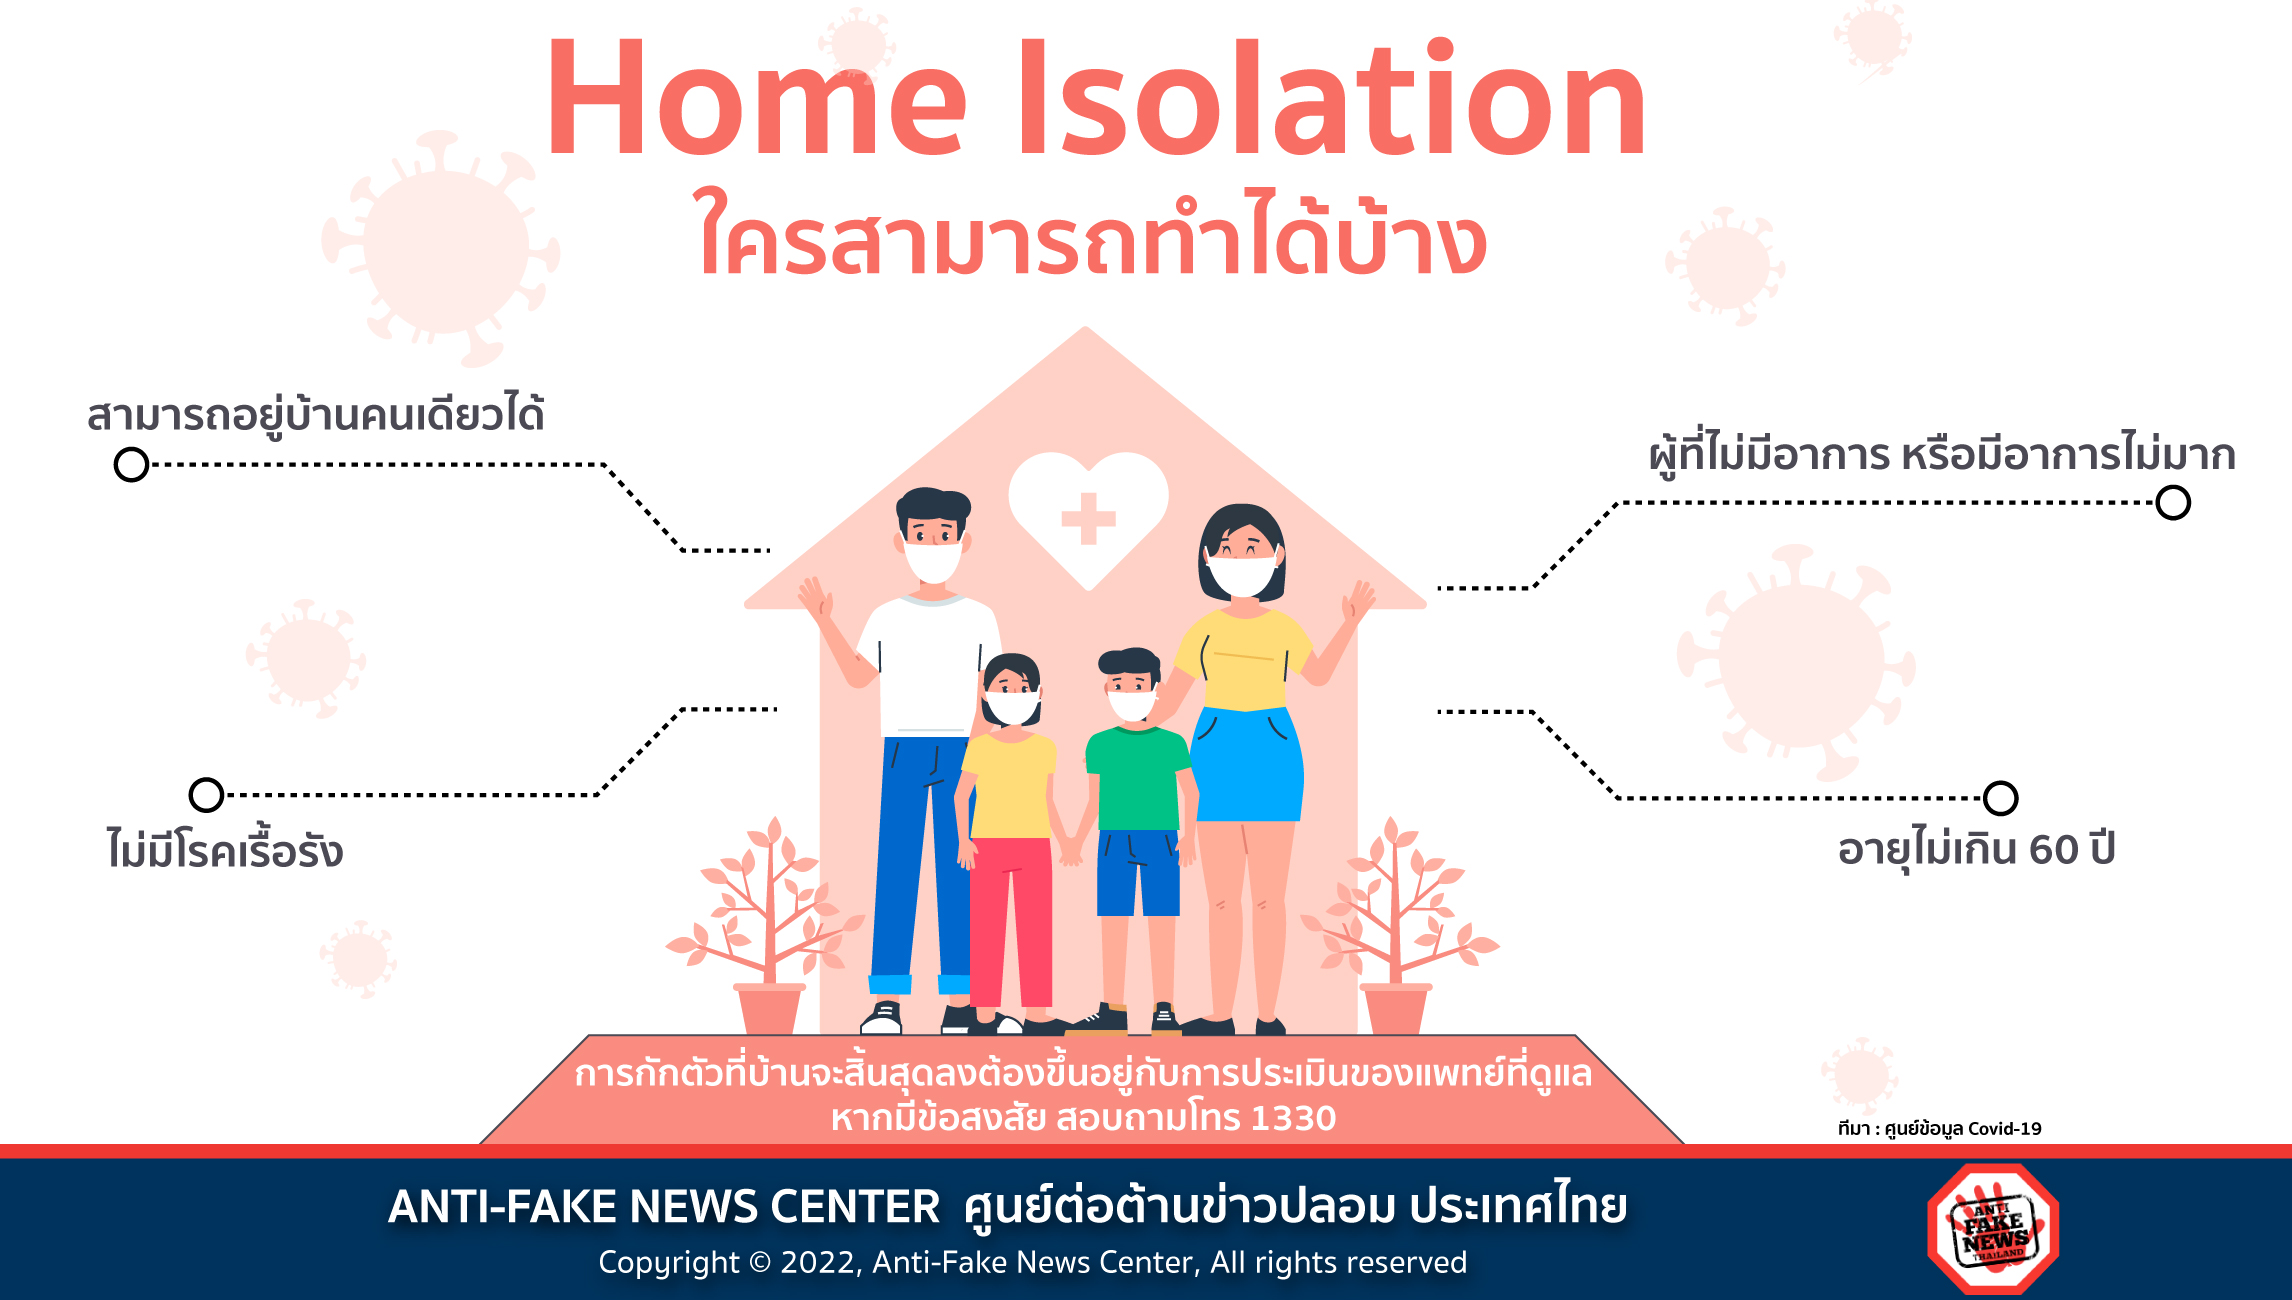 11 Feb 22 Home Isolation ใครสามารถทำได้บ้าง Web